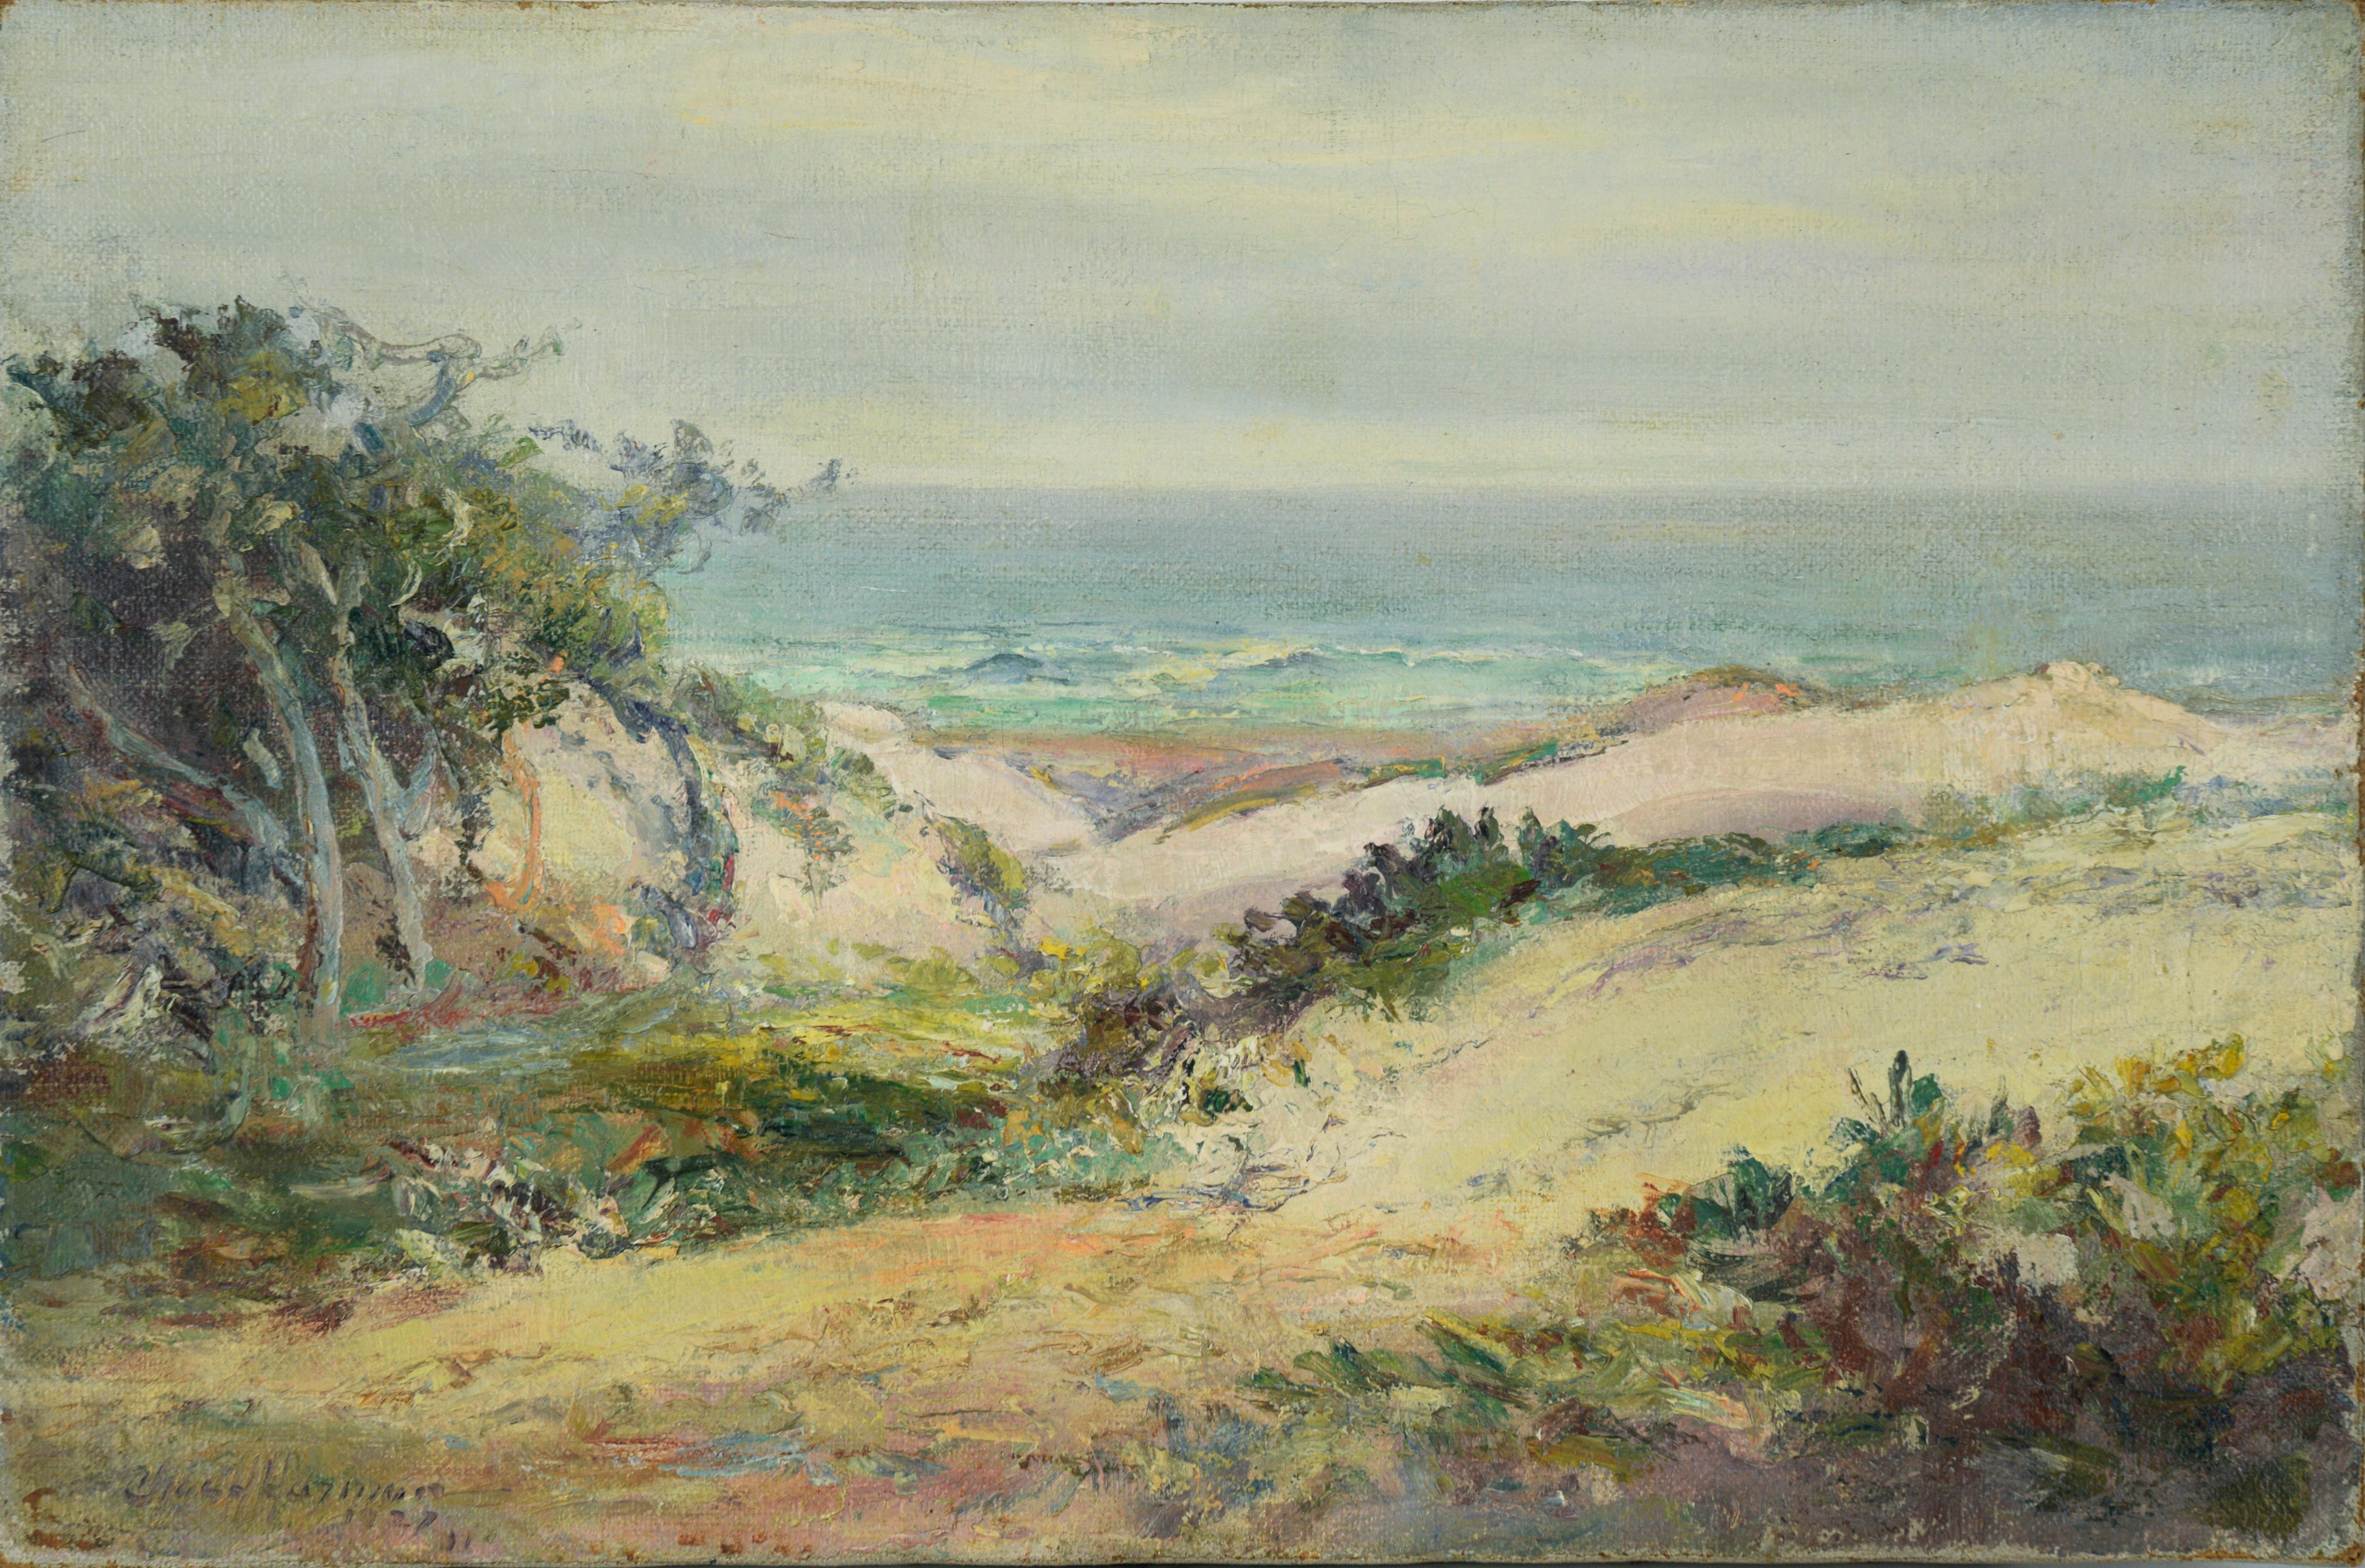 Charles Harmon Landscape Painting - 1927 Carmel by the Sea - Beach, California Coastline - Oil on Linen